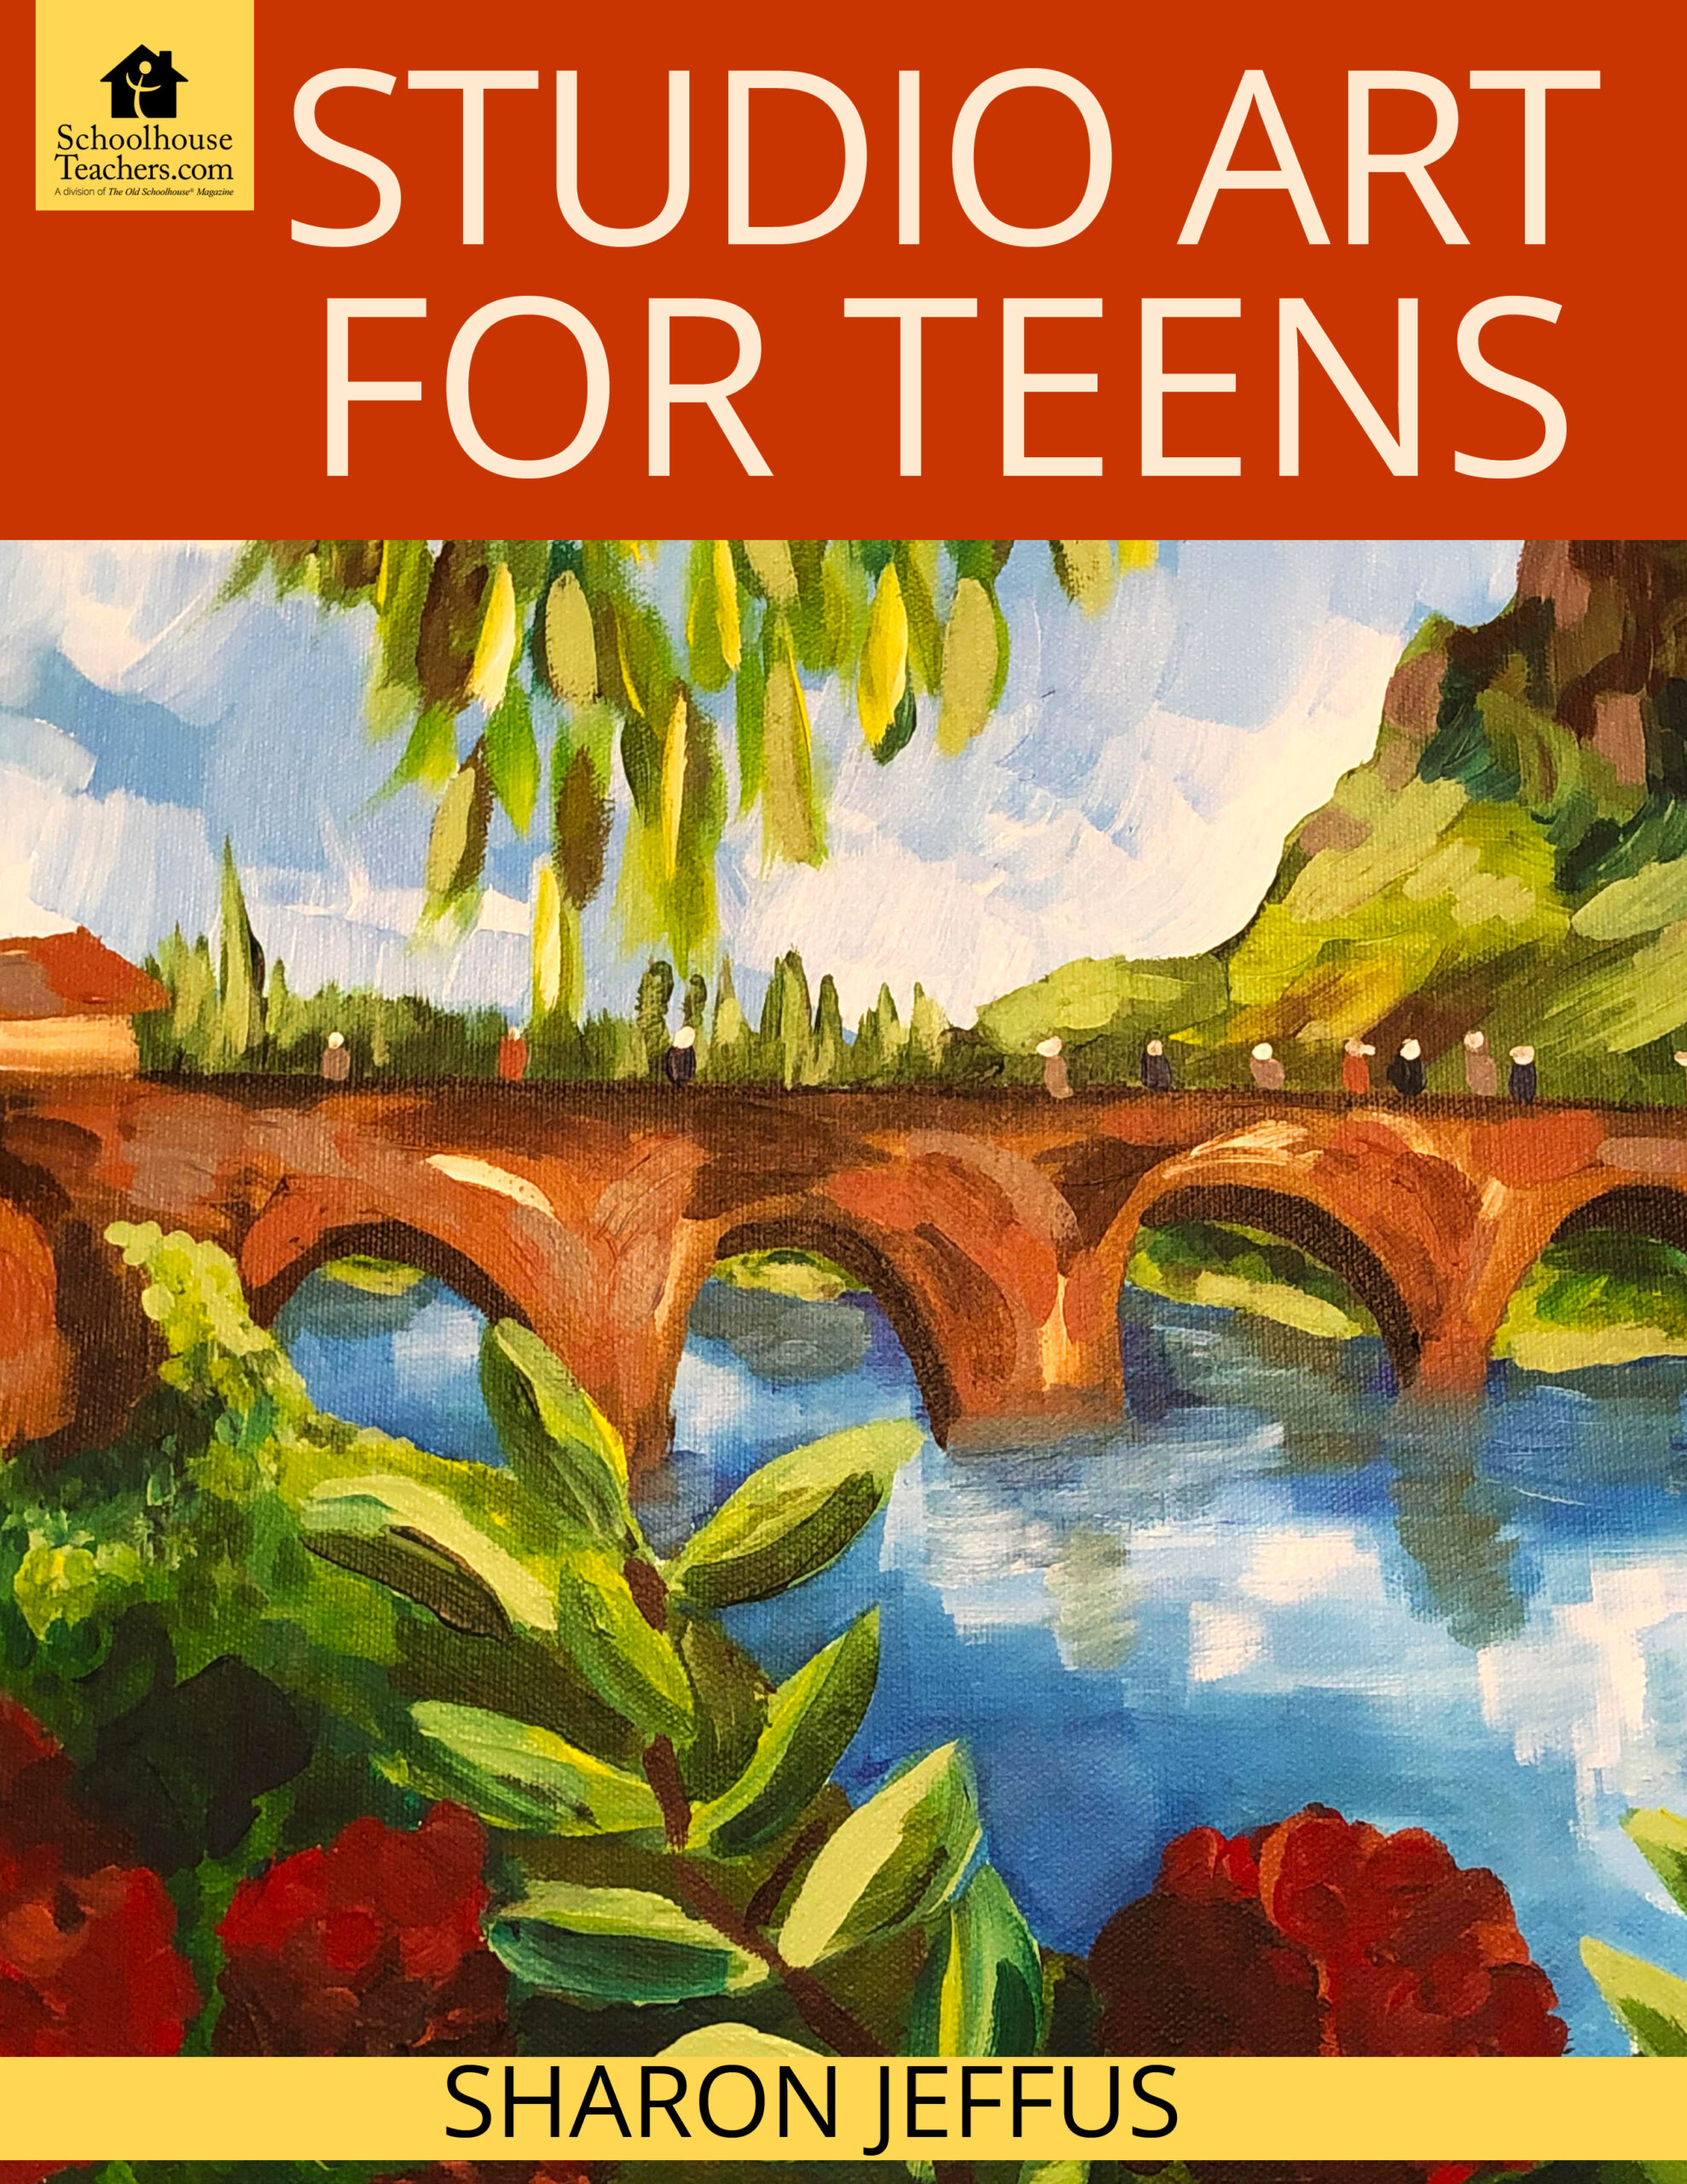 Studio Art for Teens - Online Art Classes for High School Students